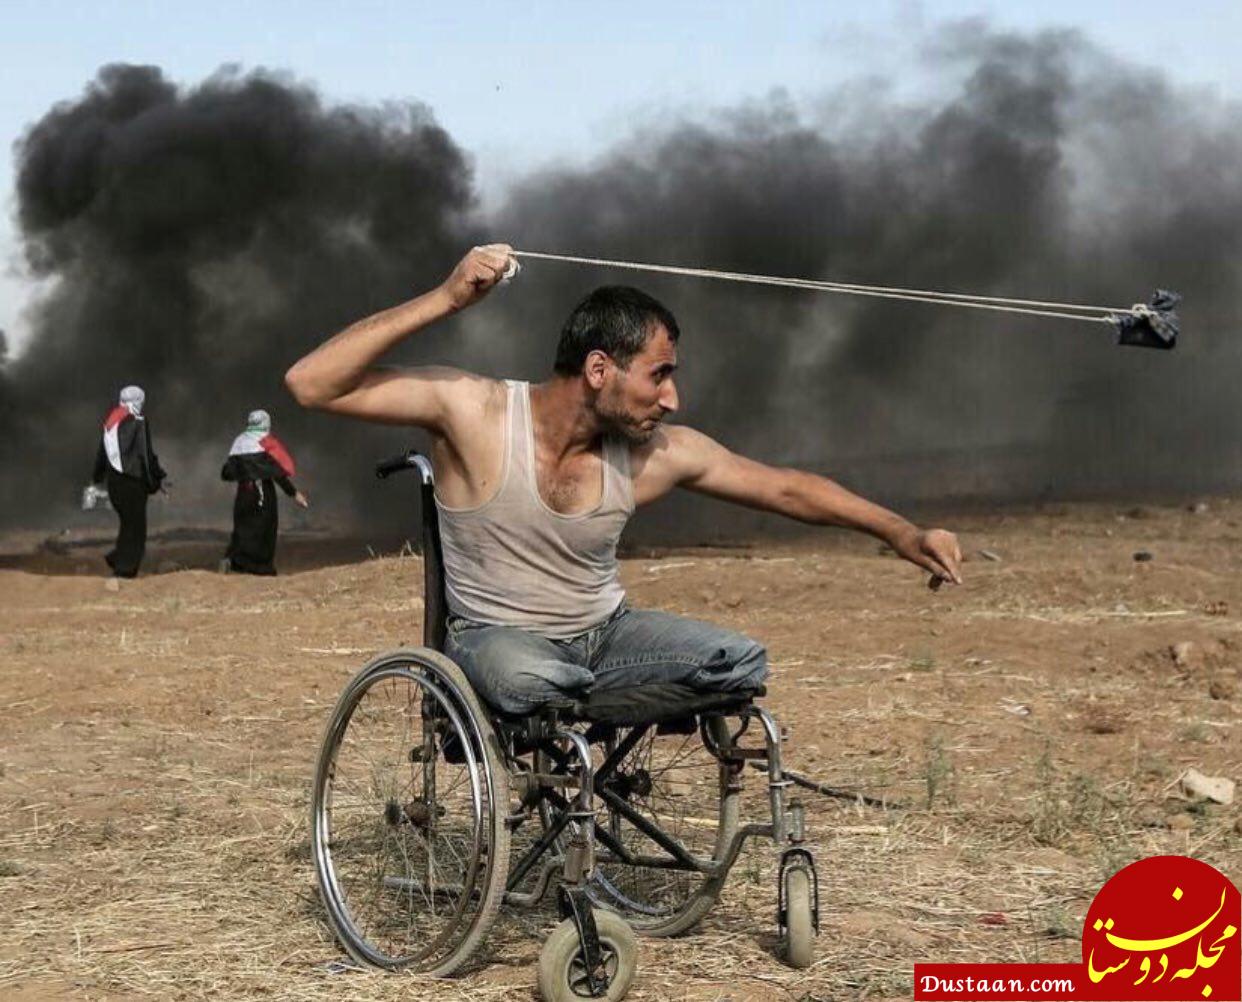 www.dustaan.com جوان 29 ساله فلسطینی که تصویرش دنیا را تکان داد